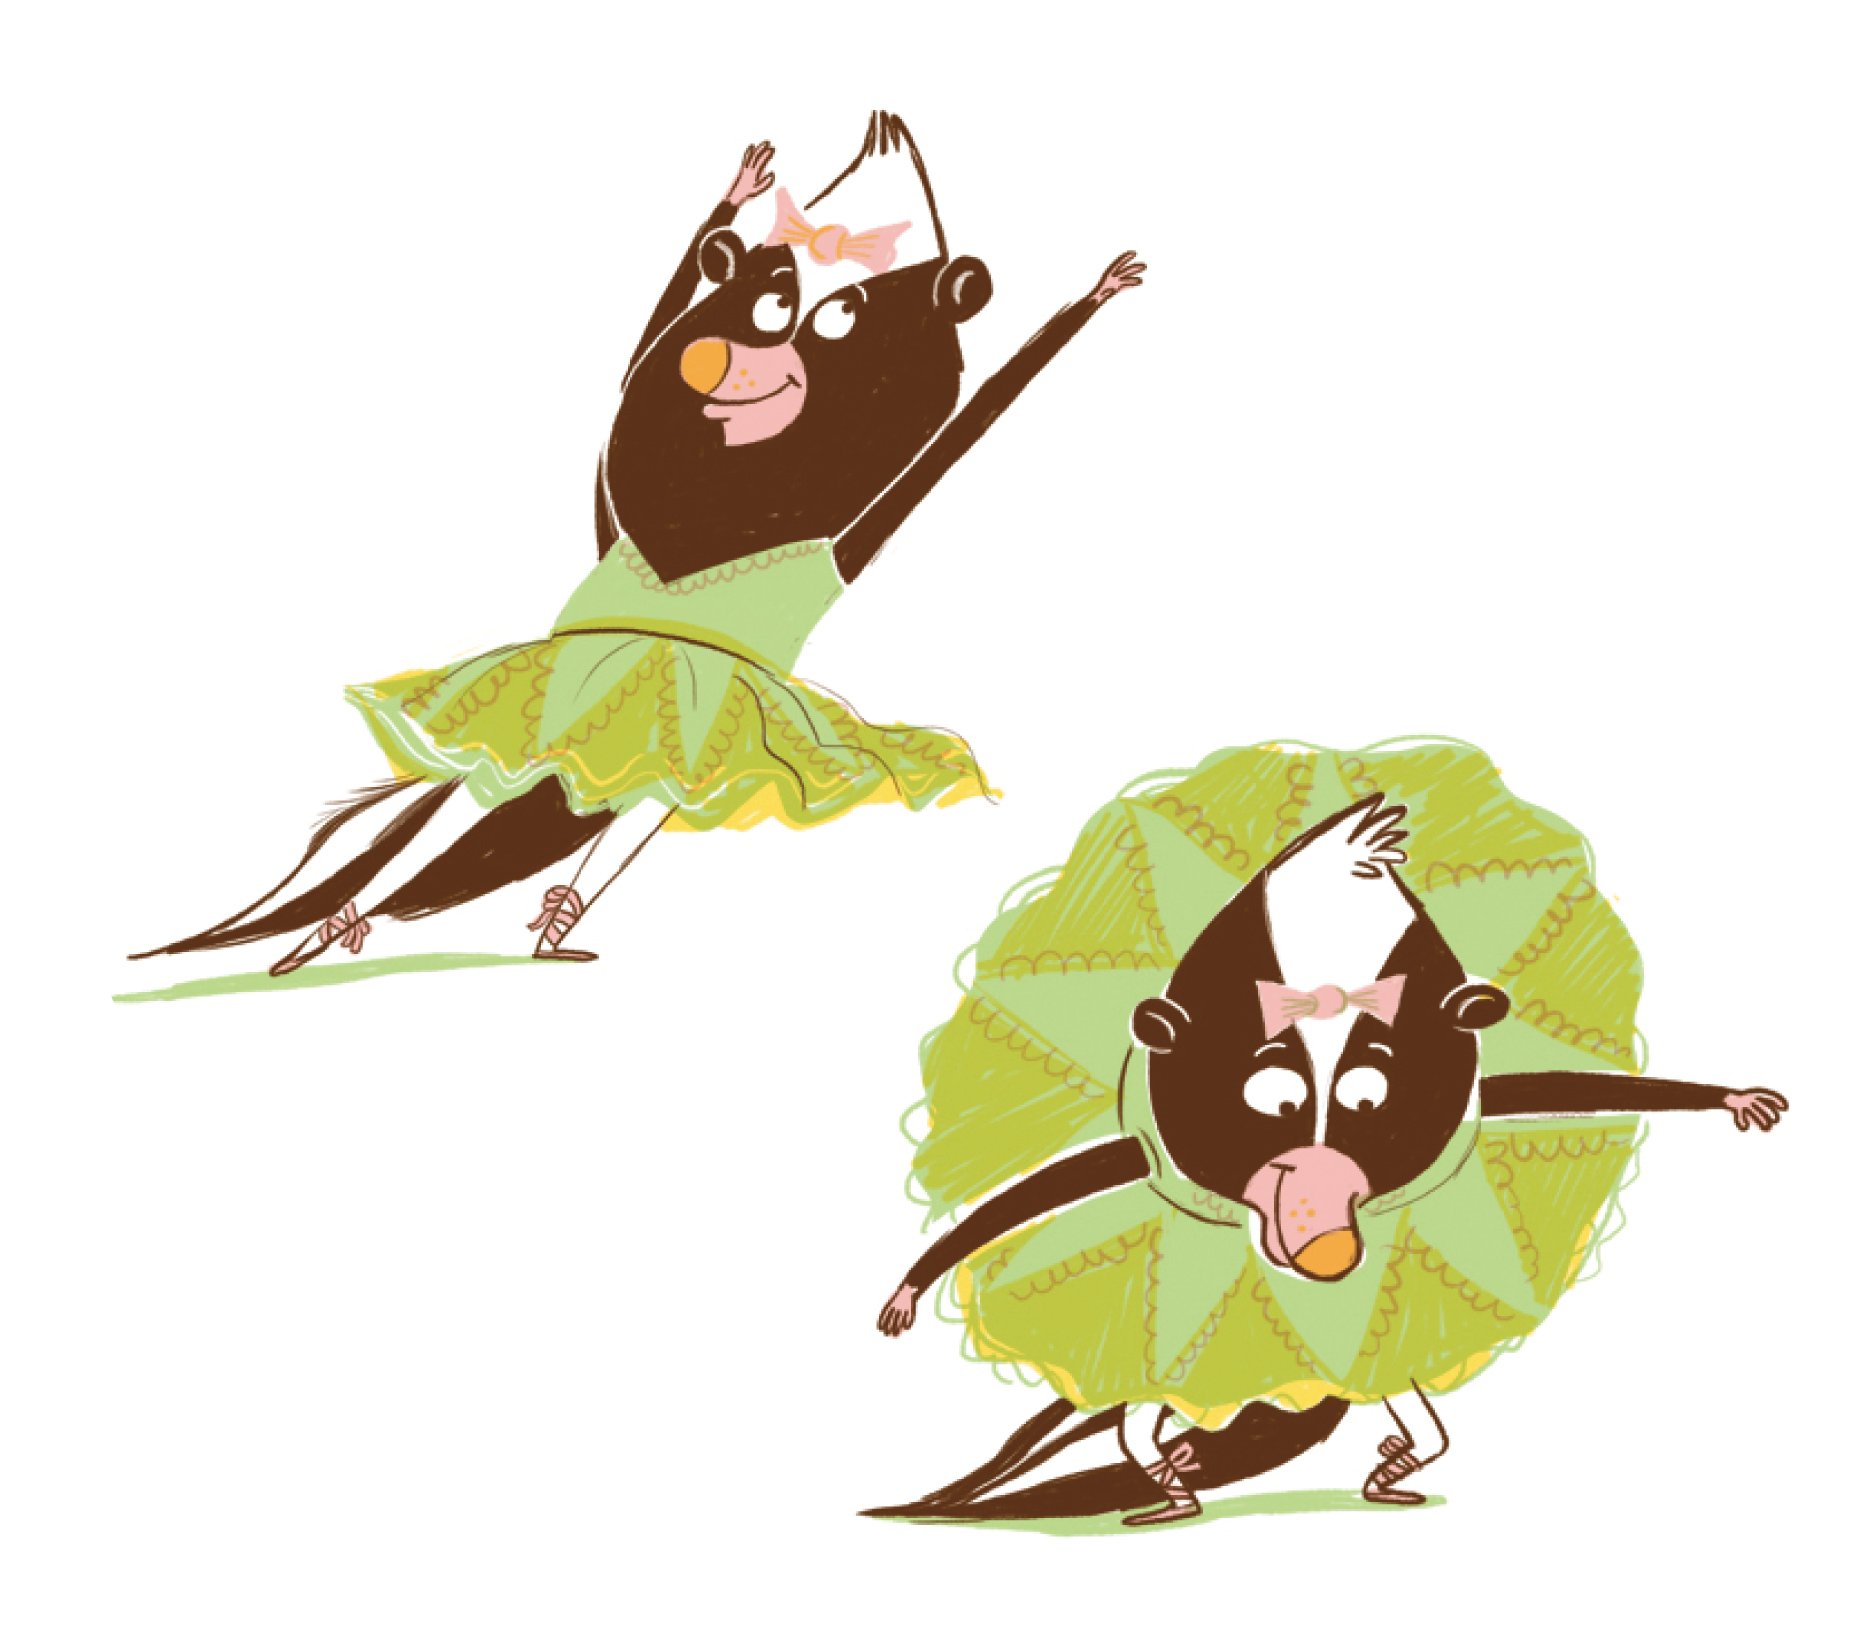 tor-freeman-ballarina-skunk-illustration.jpg